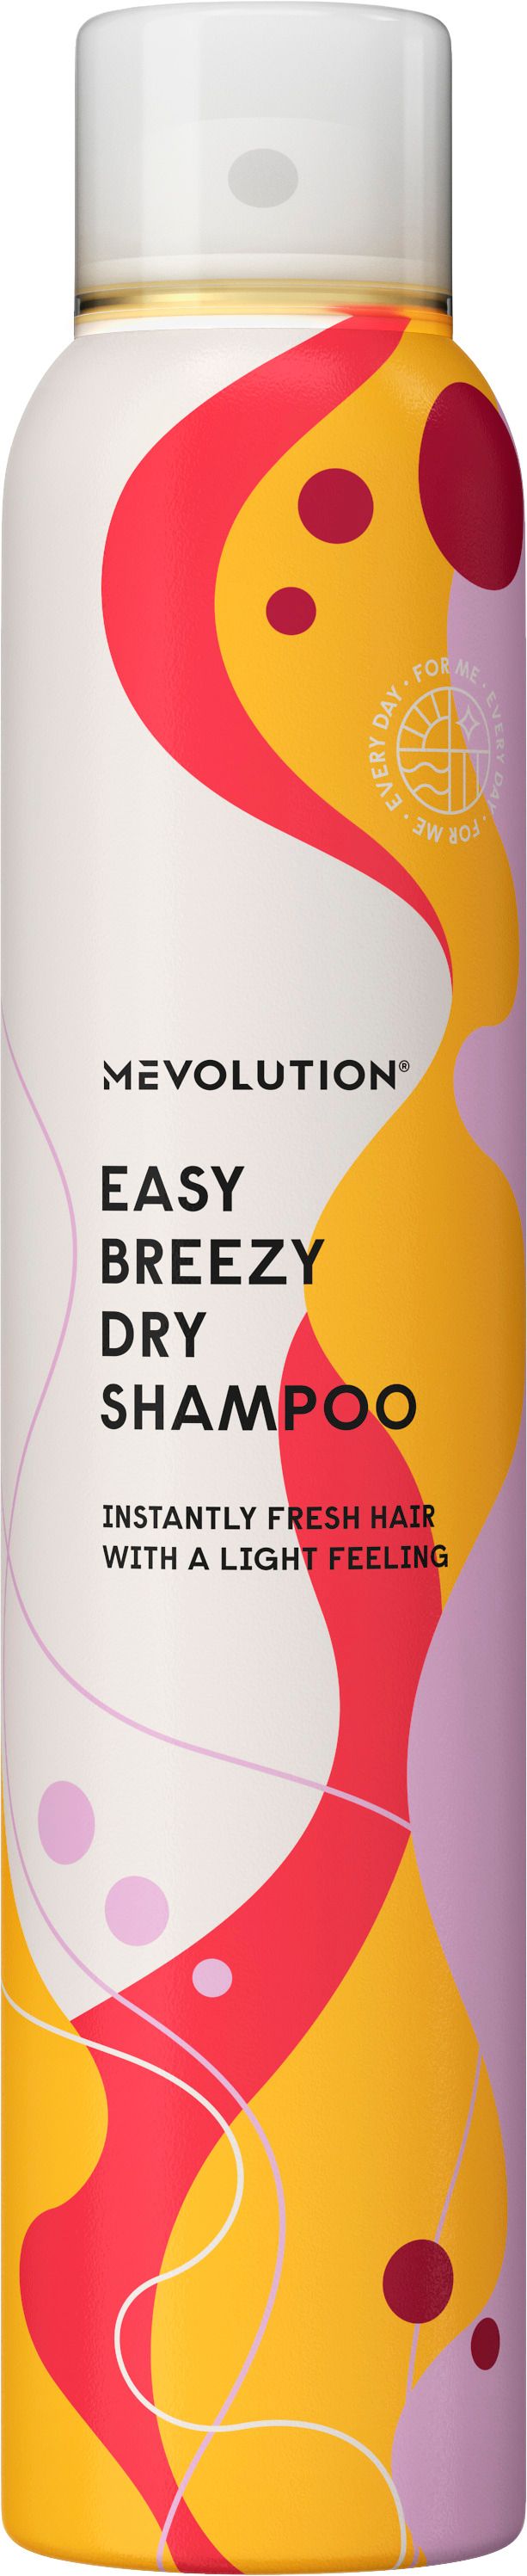 Mevolution Easy Breezy Dry Shampoo